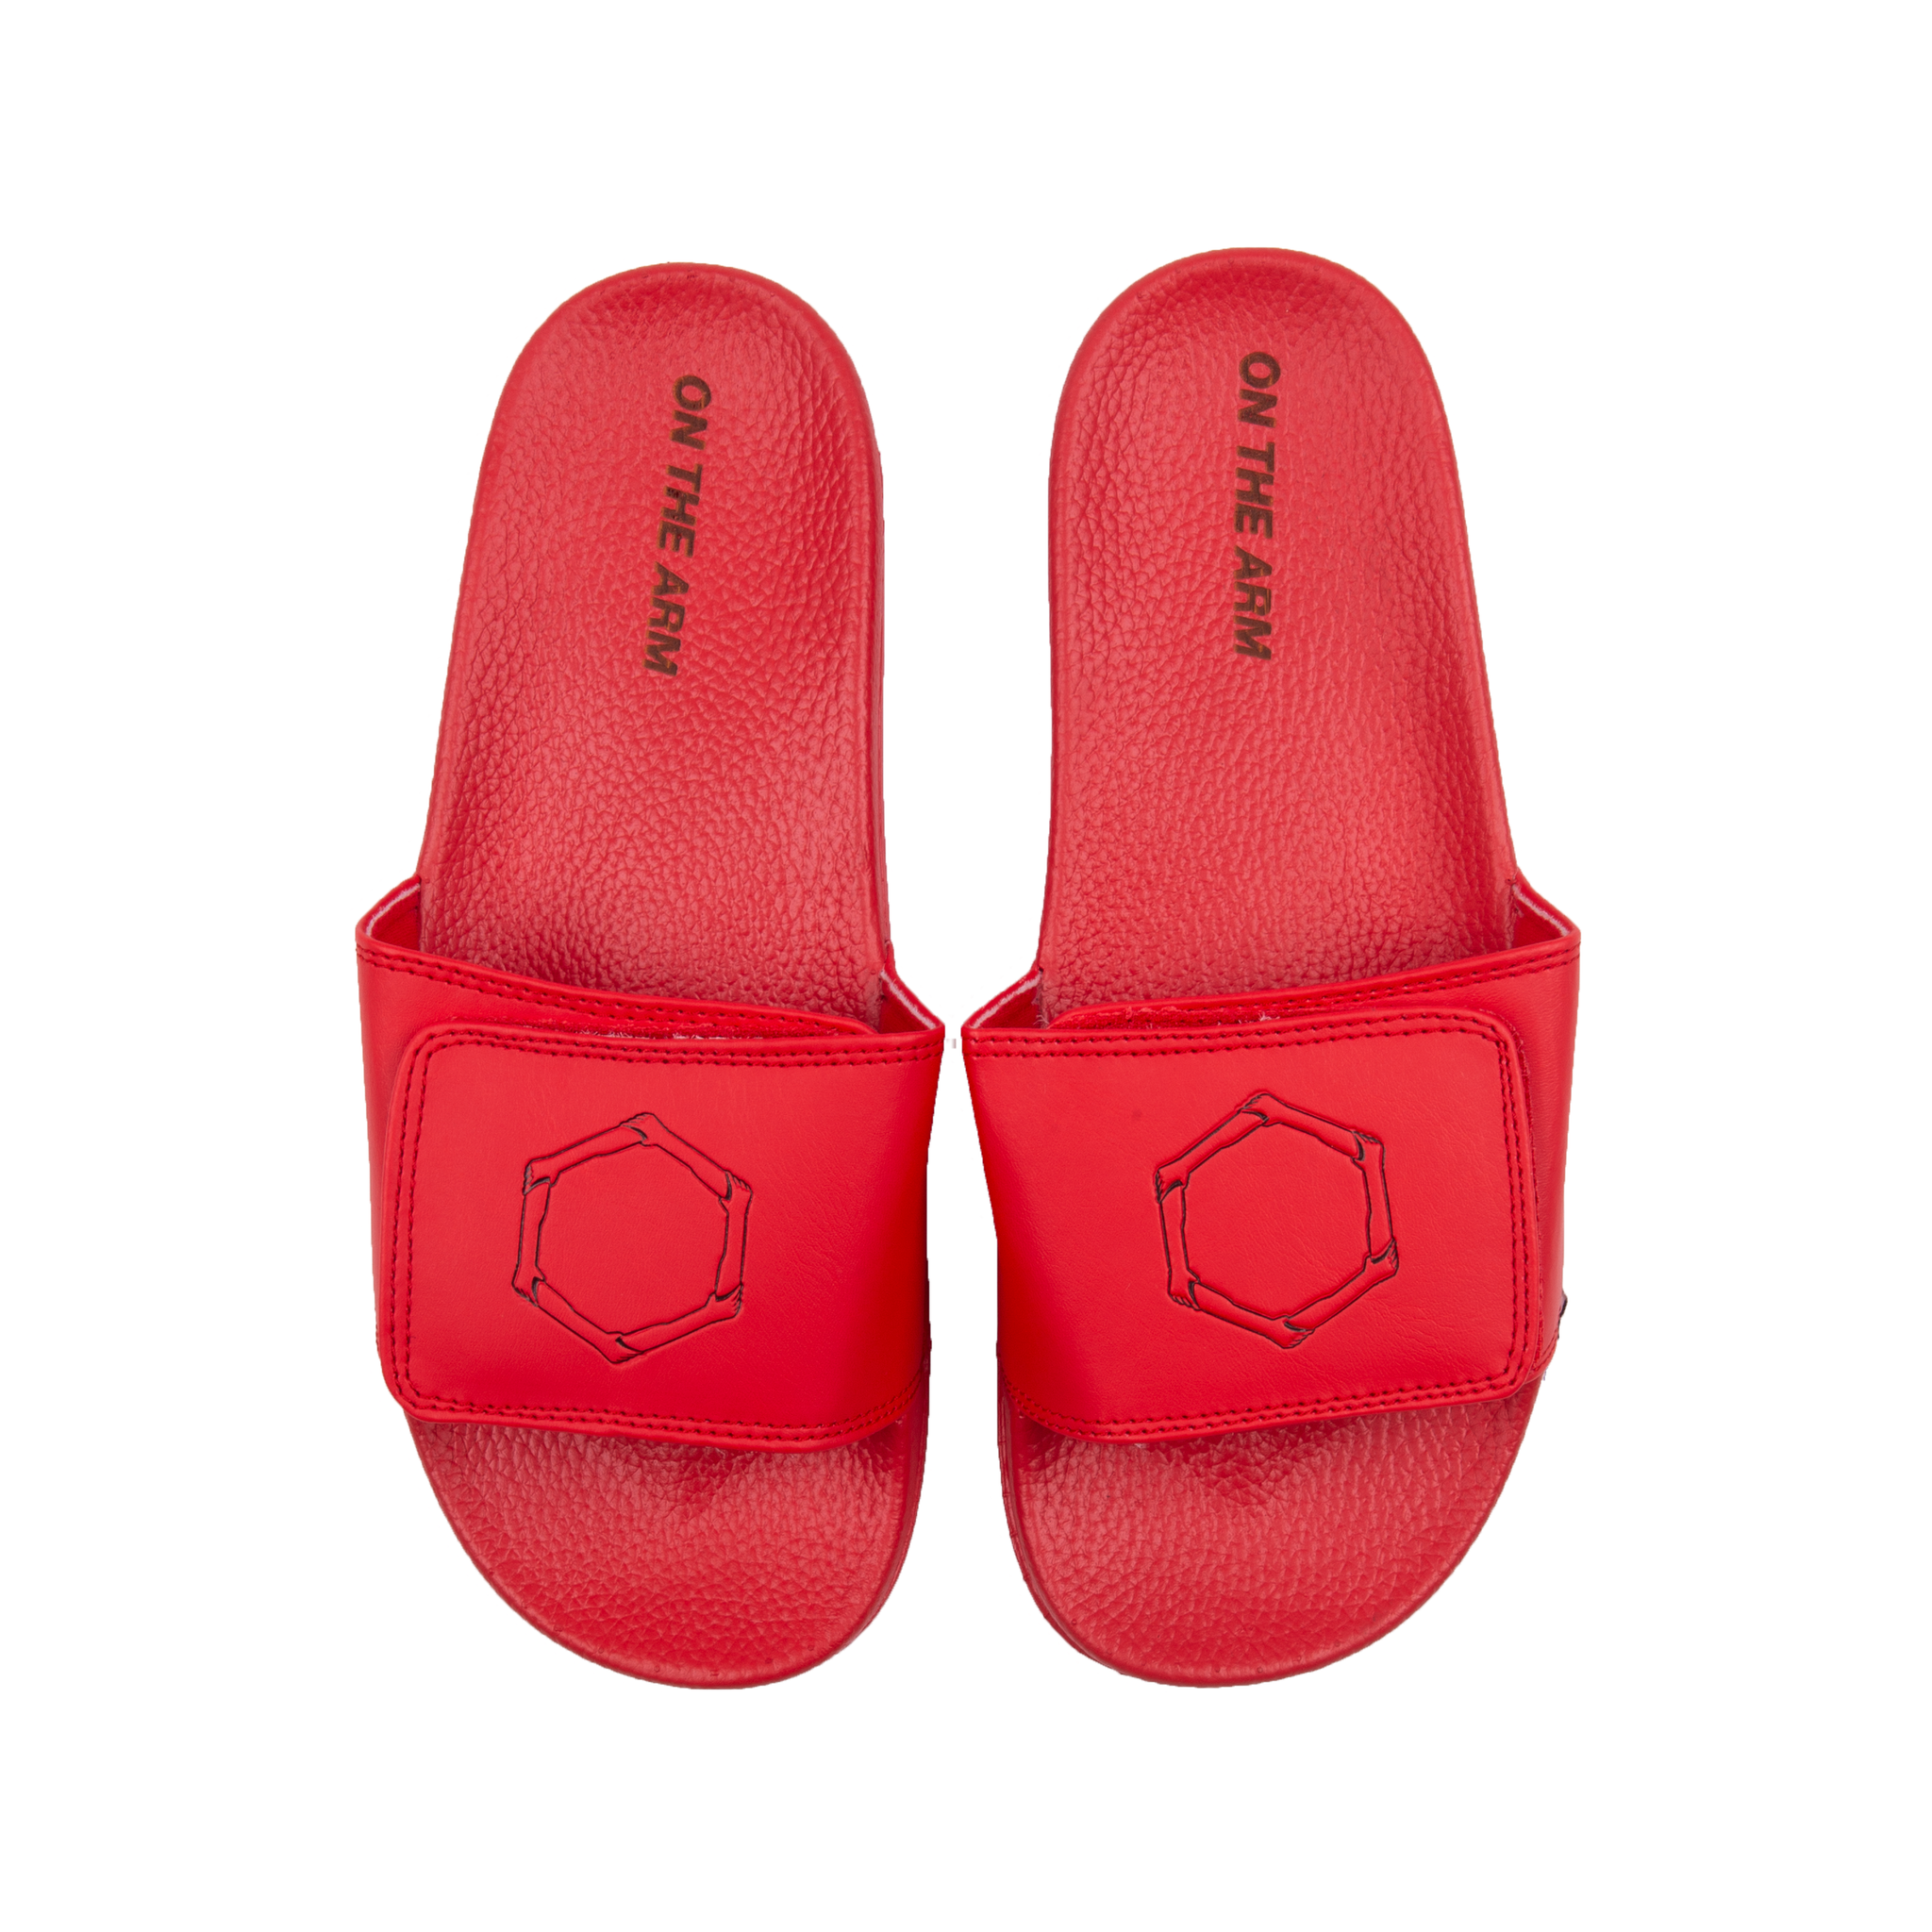 OTA Red Sandals